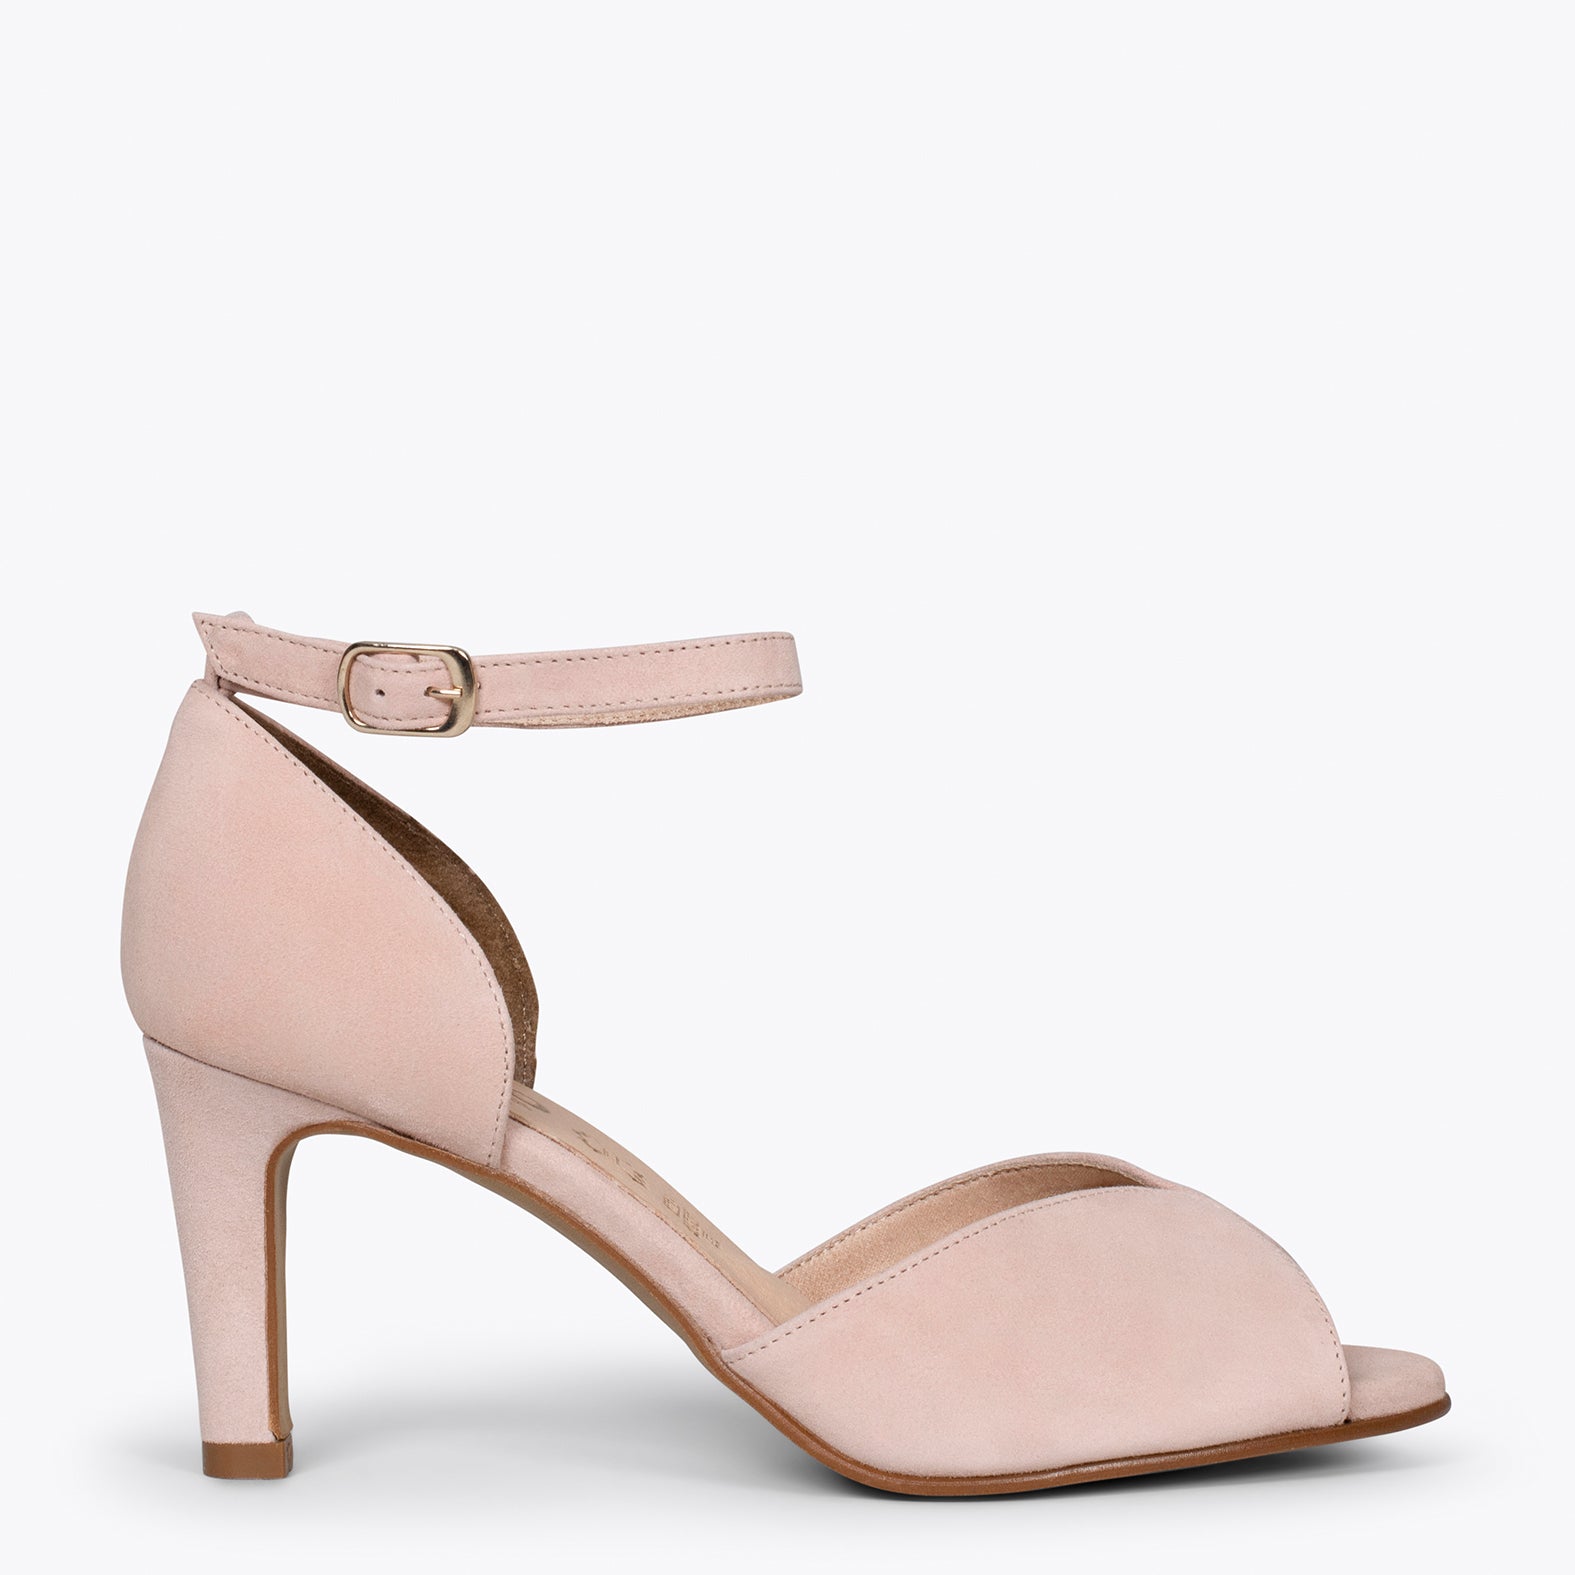 PETAL – NUDE high heel sandal